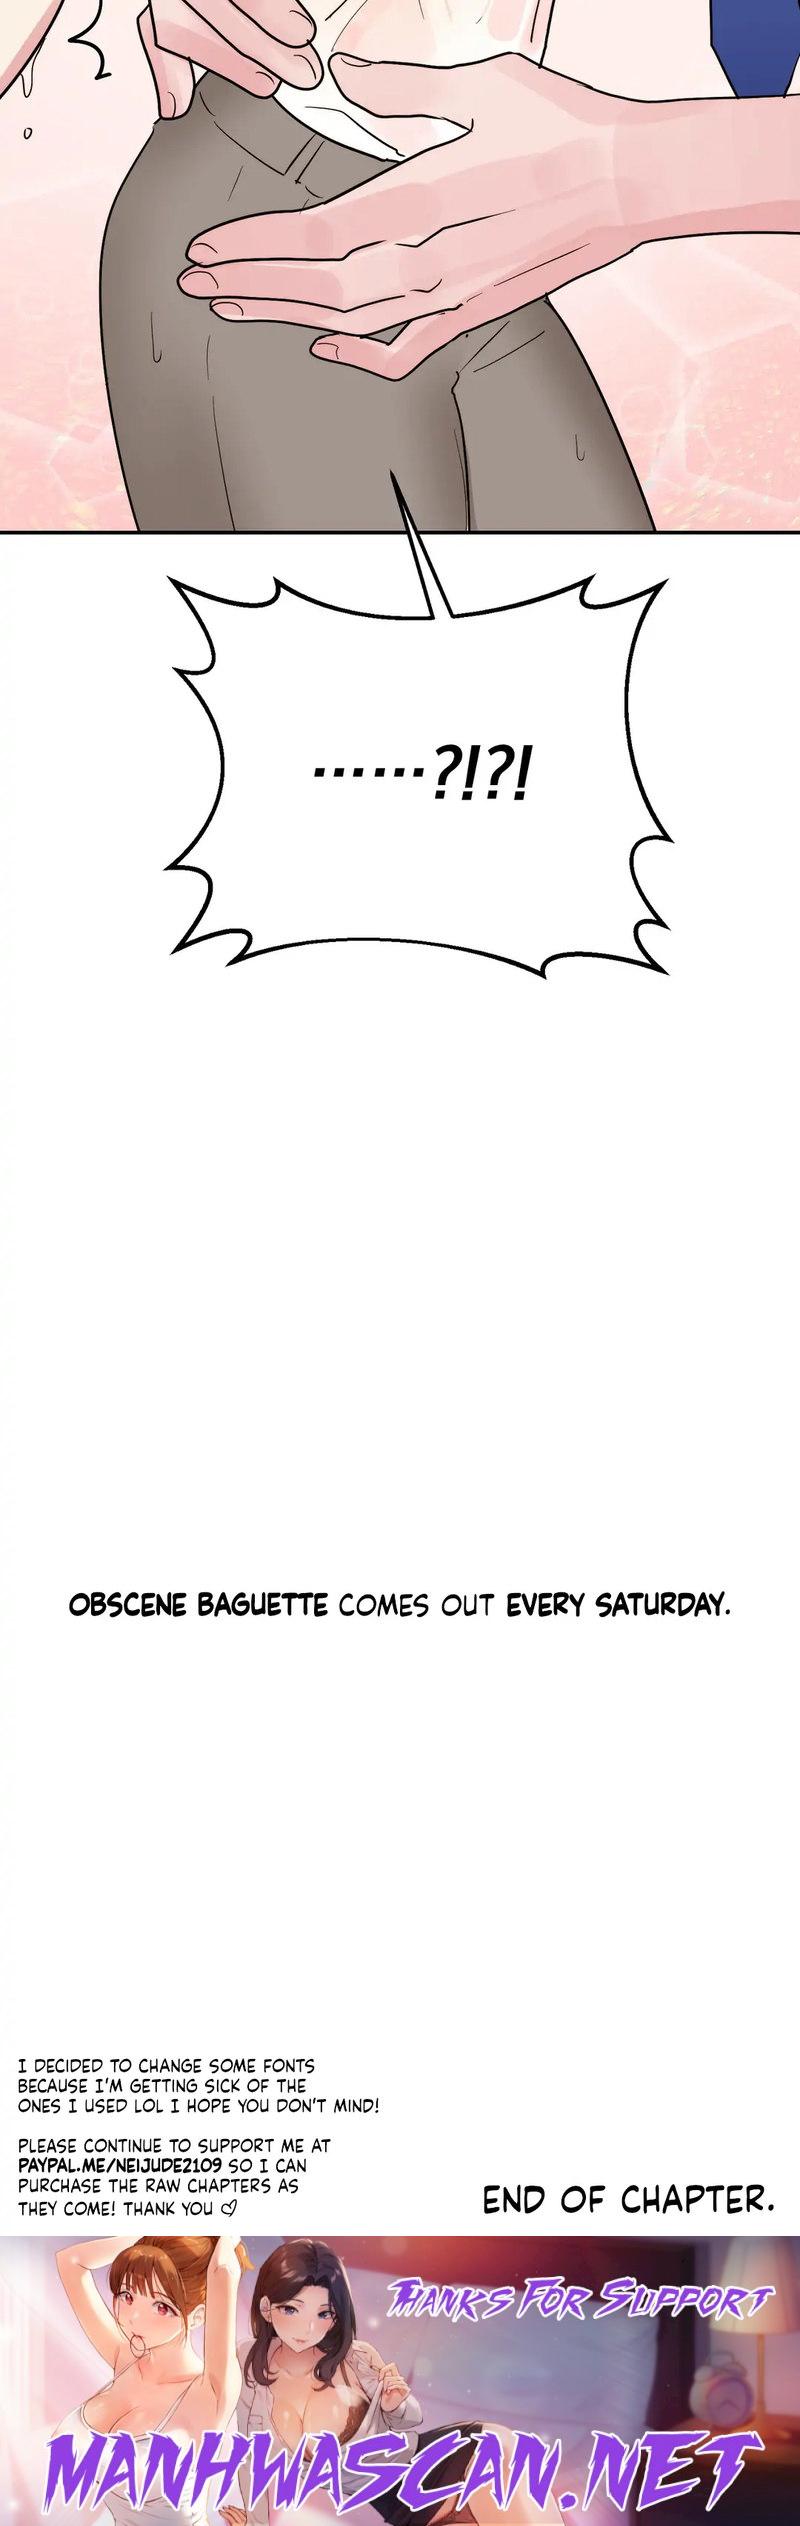 Obscene Baguette - Chapter 15 Page 42